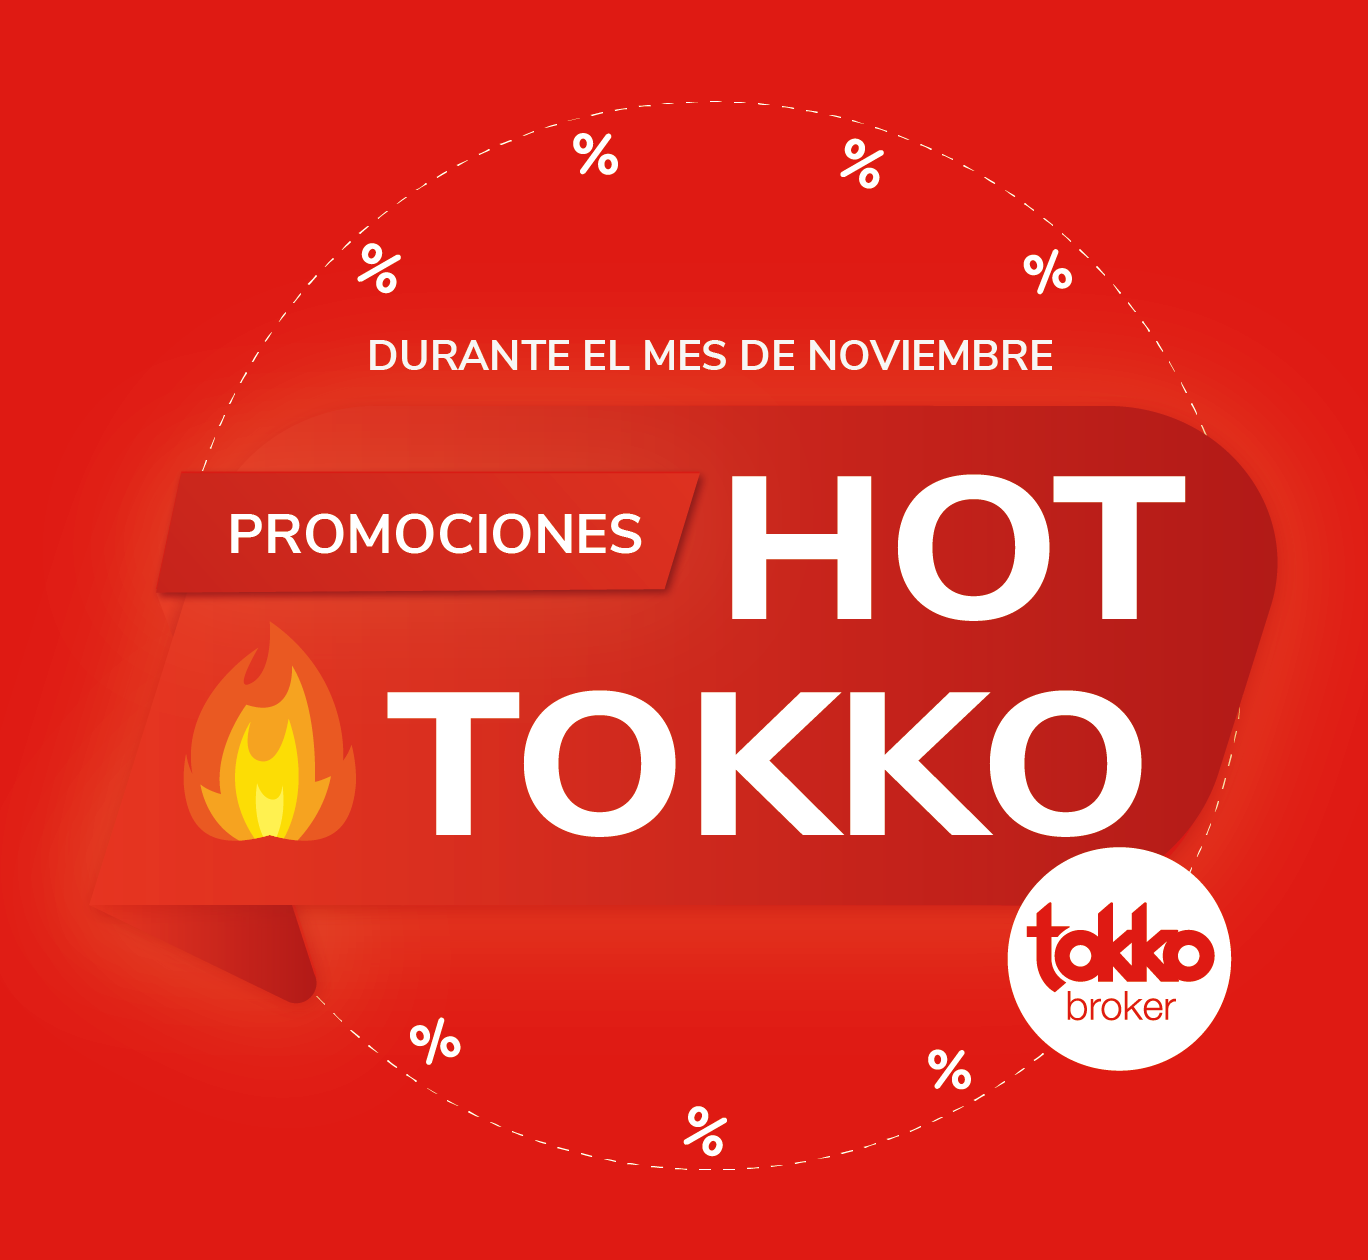 Hot-tokko logo-1